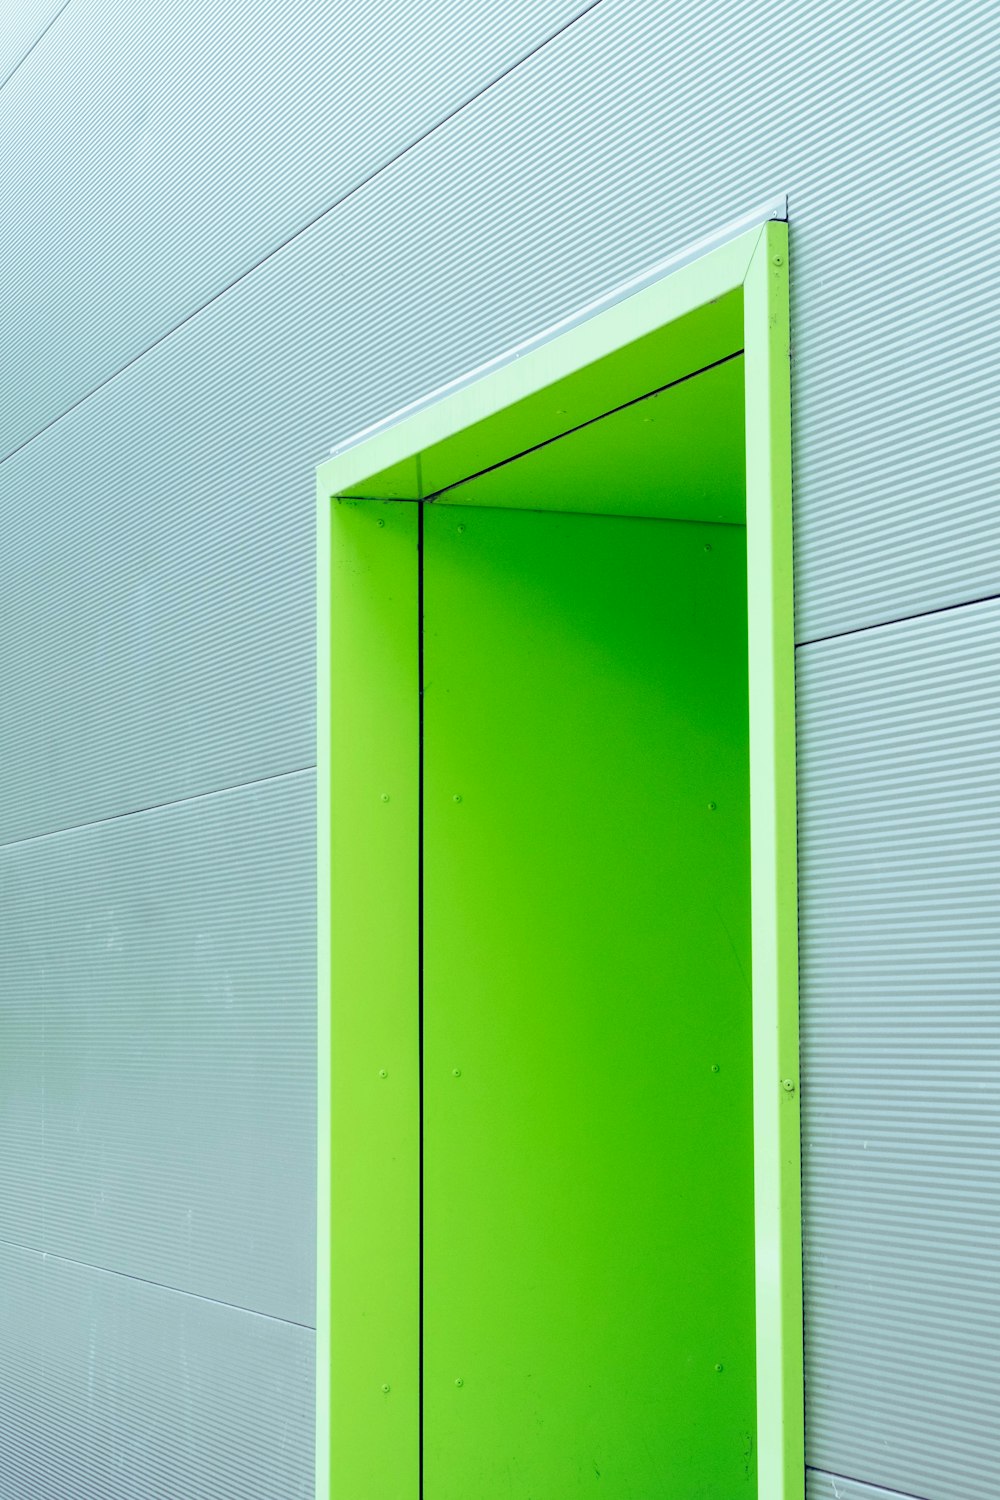 Porte verte avec mur gris